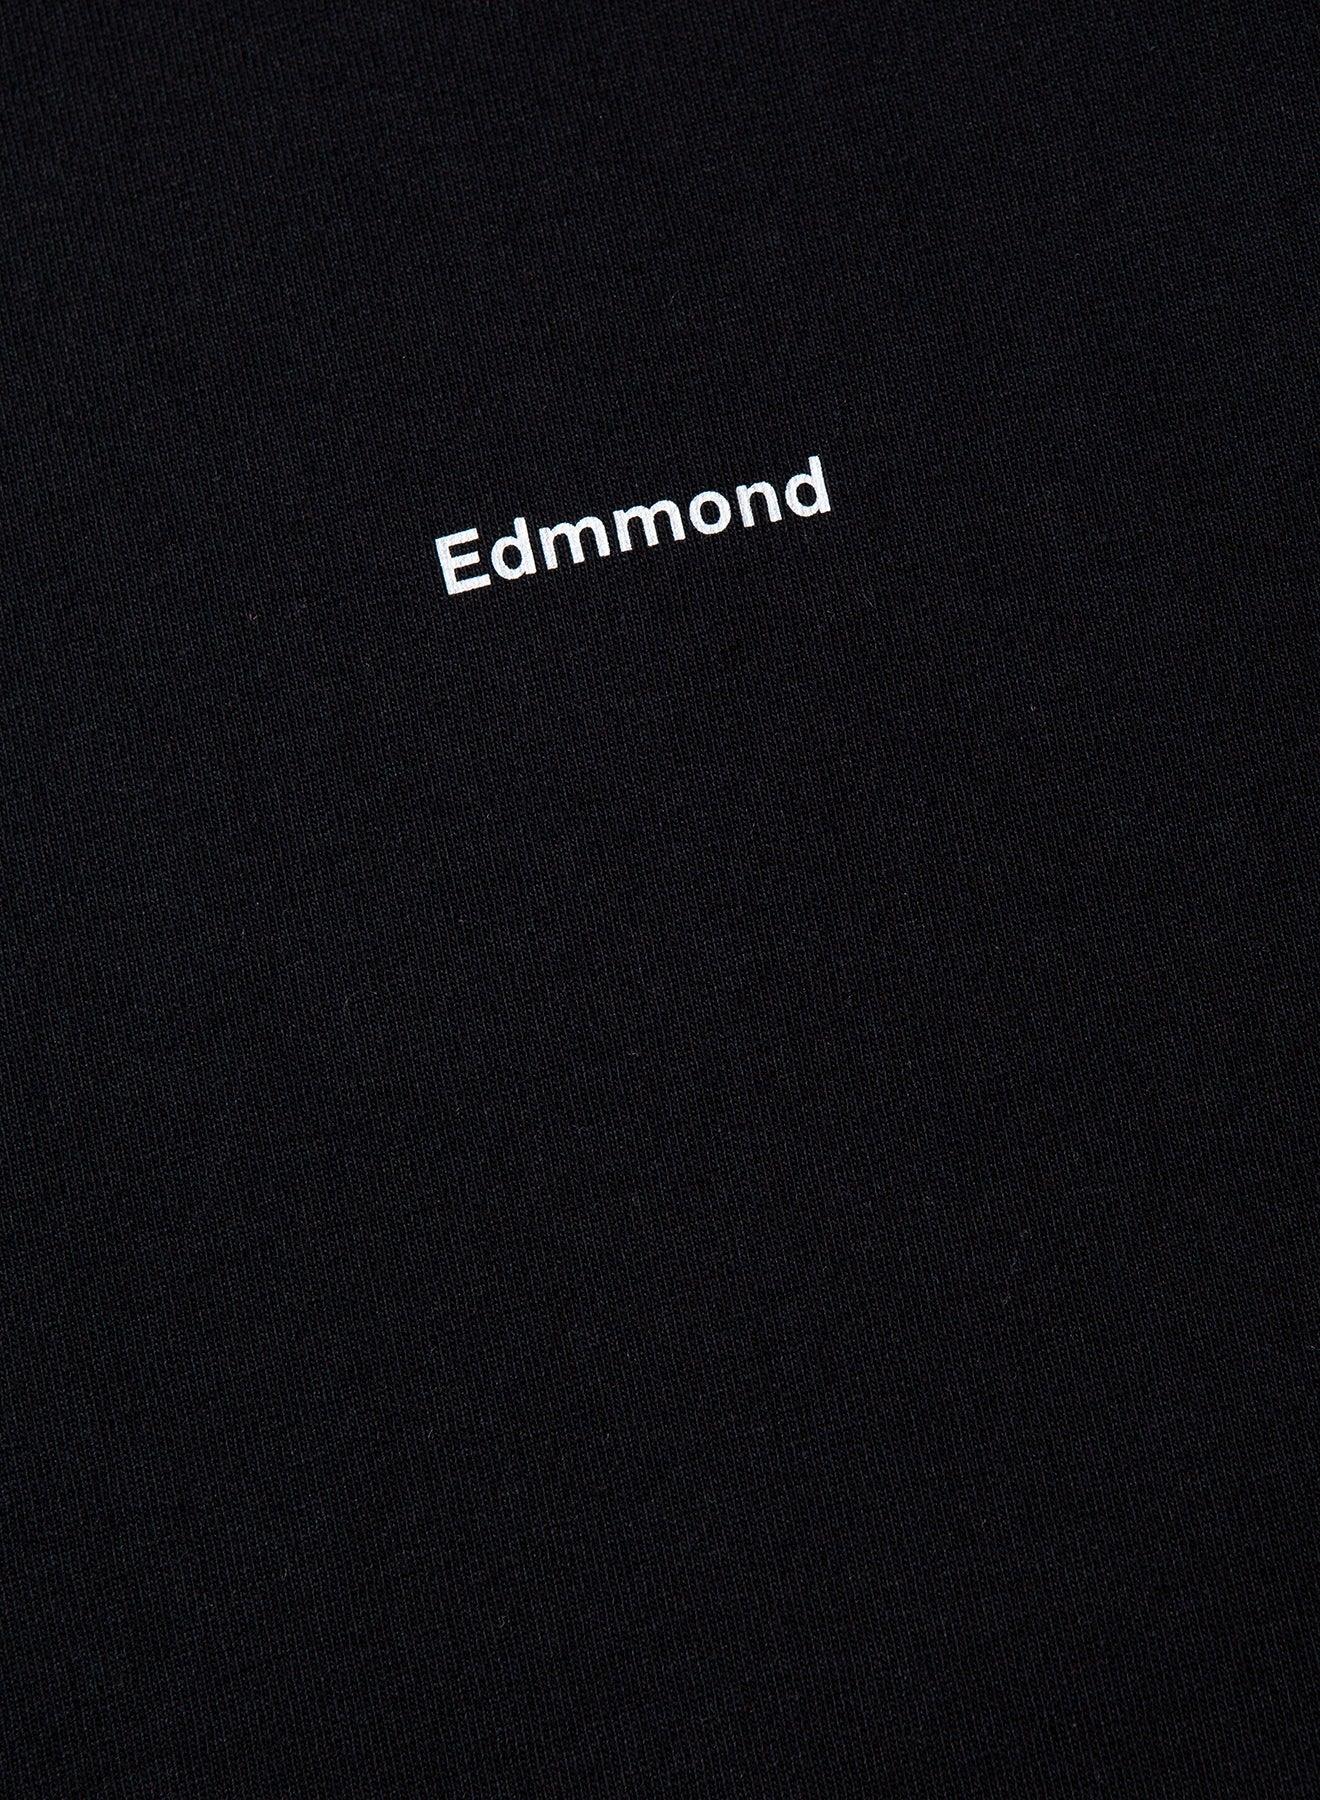 Camiseta Edmmond Studios Mini Logo Plain Black - ECRU